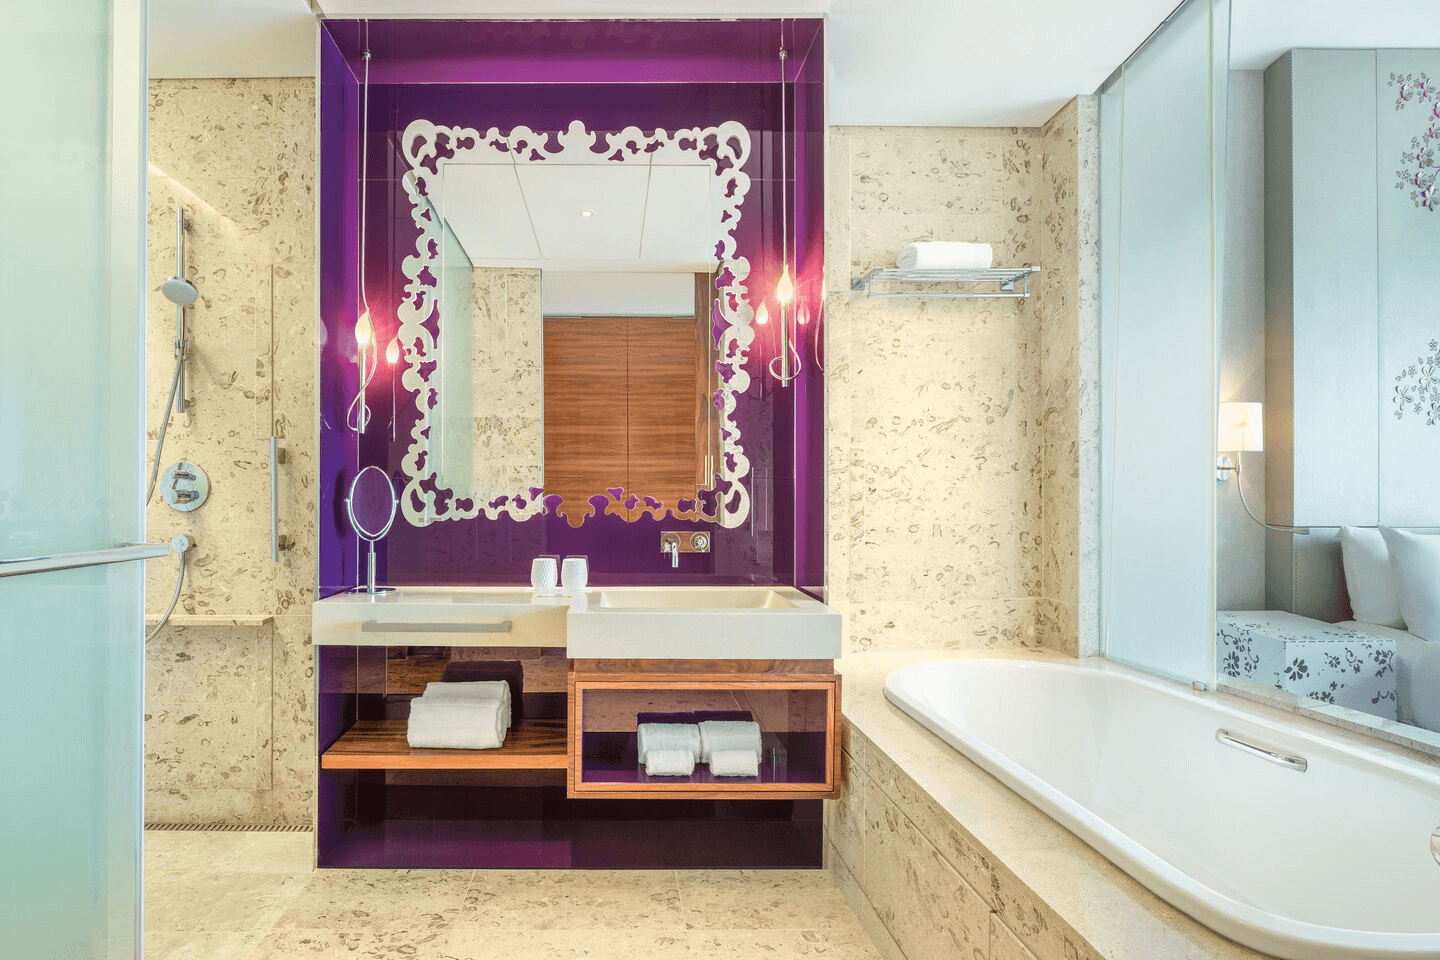 hotels with bathtubs - W Singapore guest bathroom